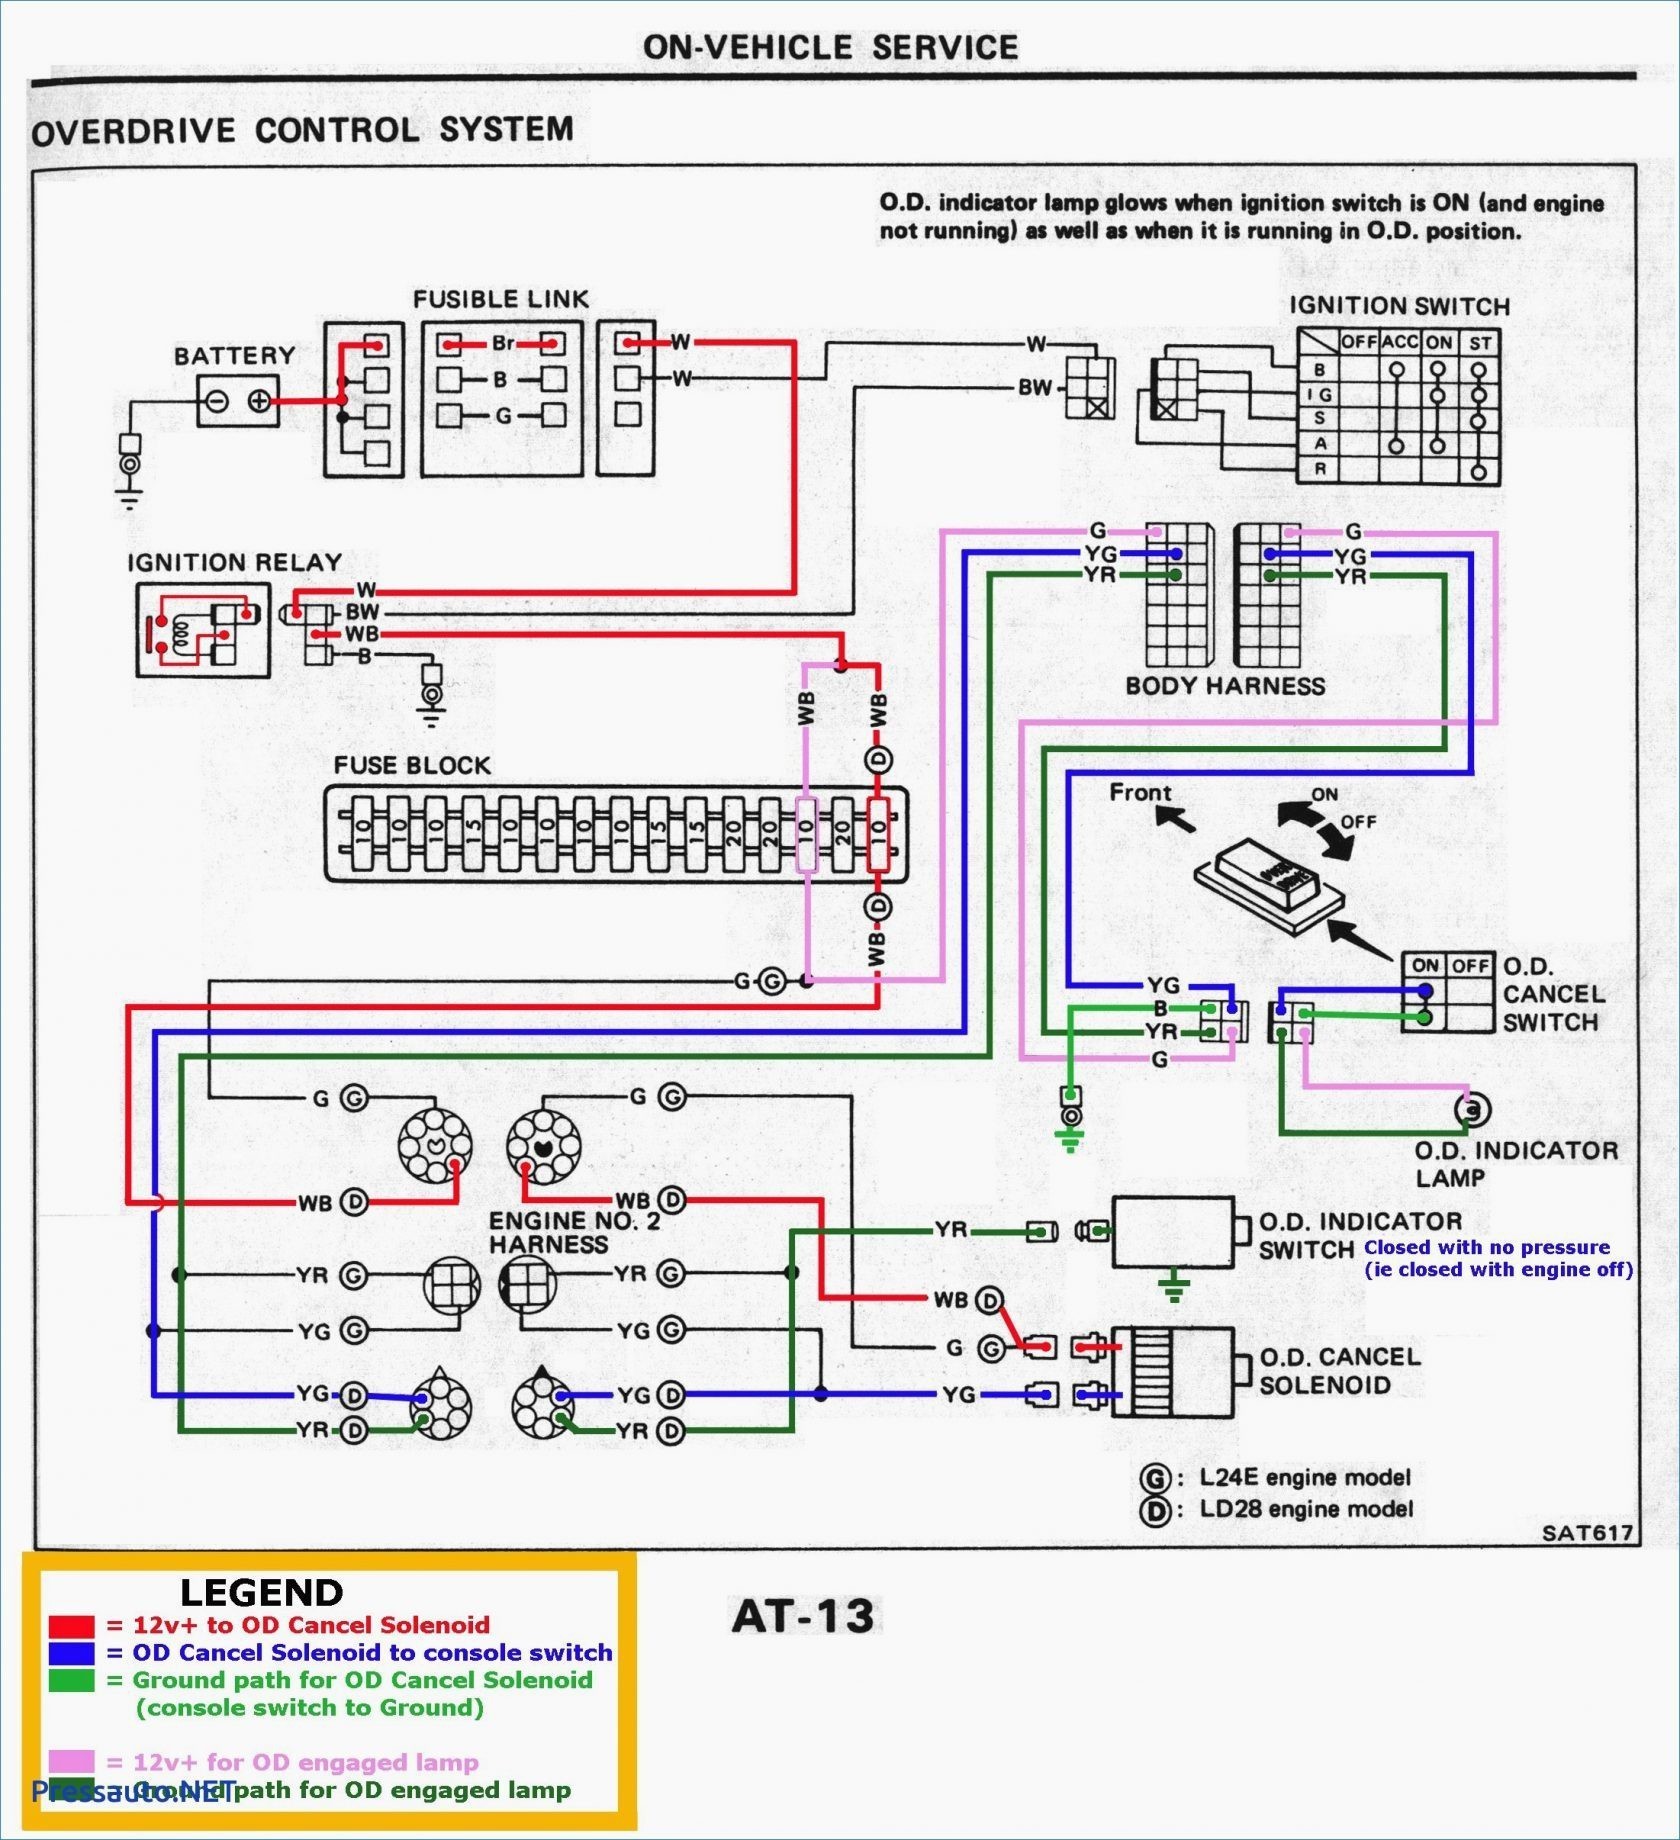 All Wheel Drive Diagram Bmw X5 Parts Diagram Wiring Diagram Inside Of All Wheel Drive Diagram